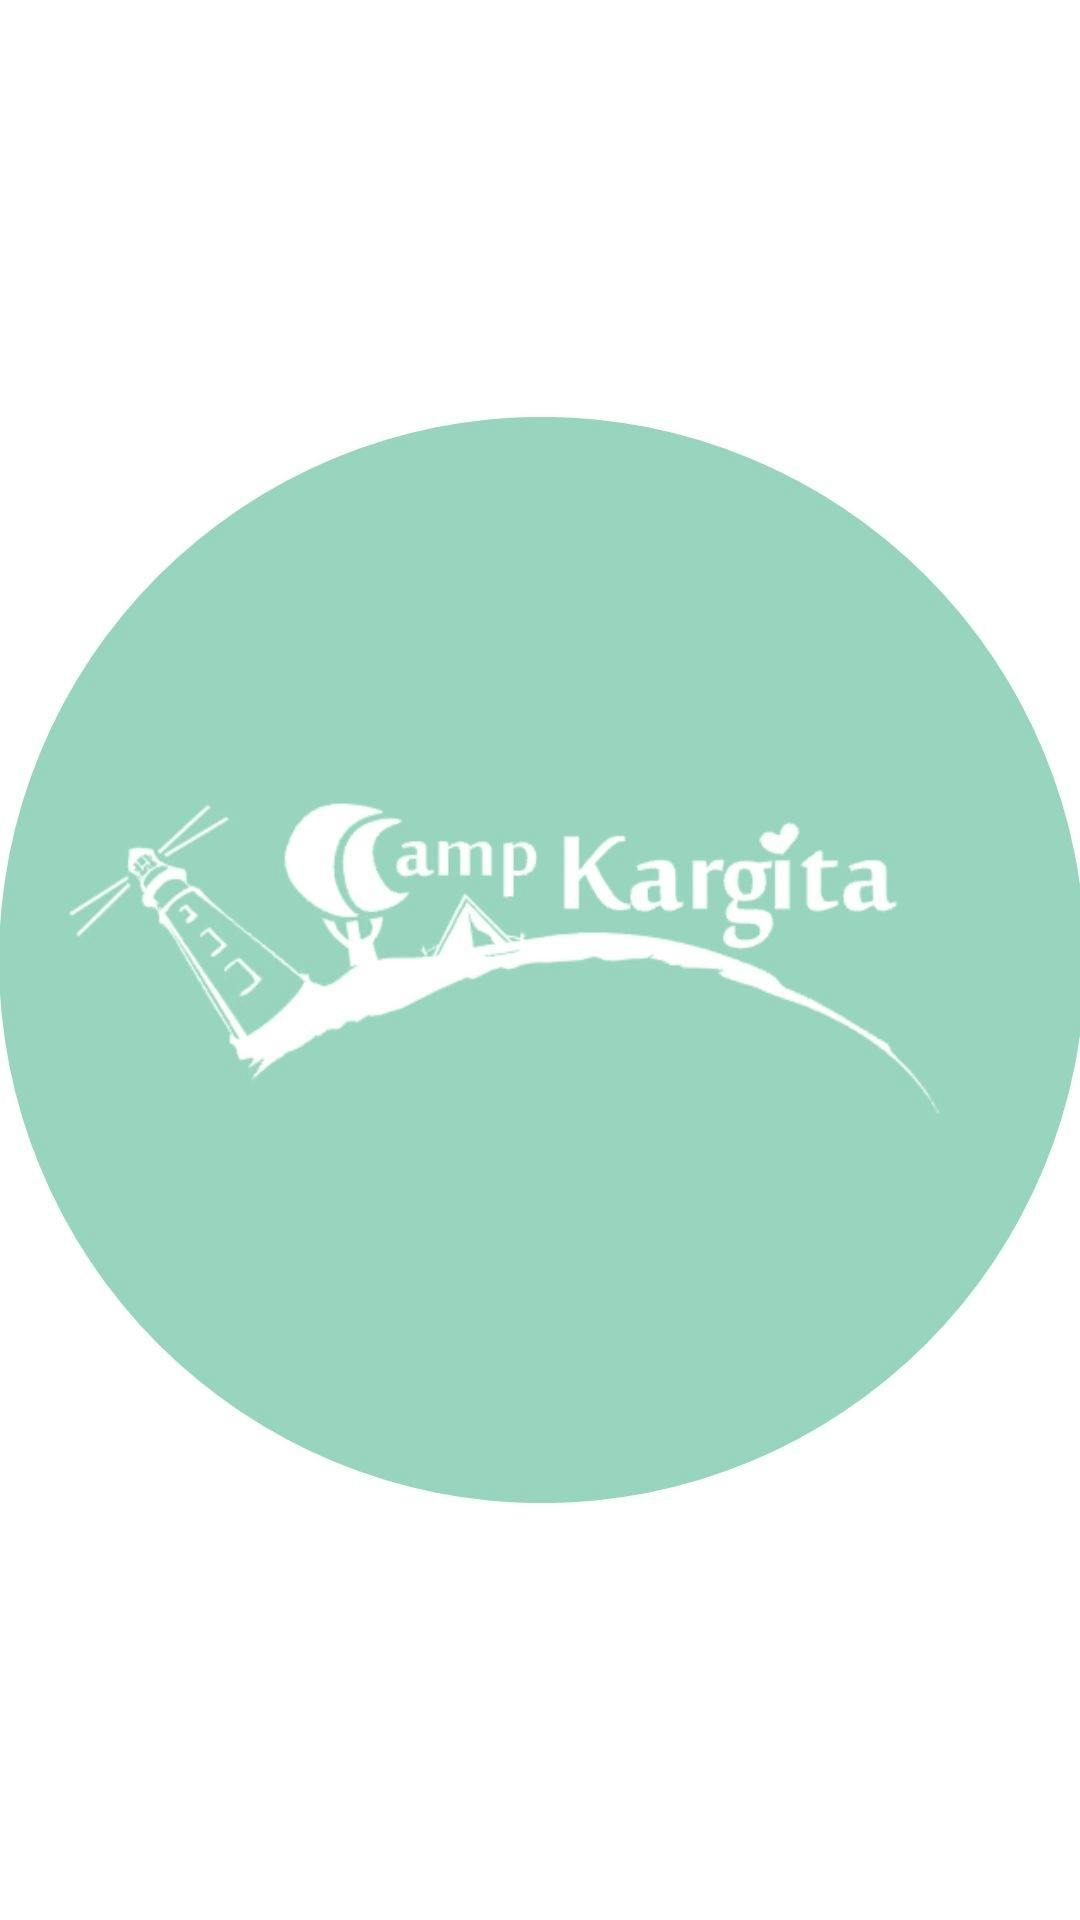 Camp Kargita